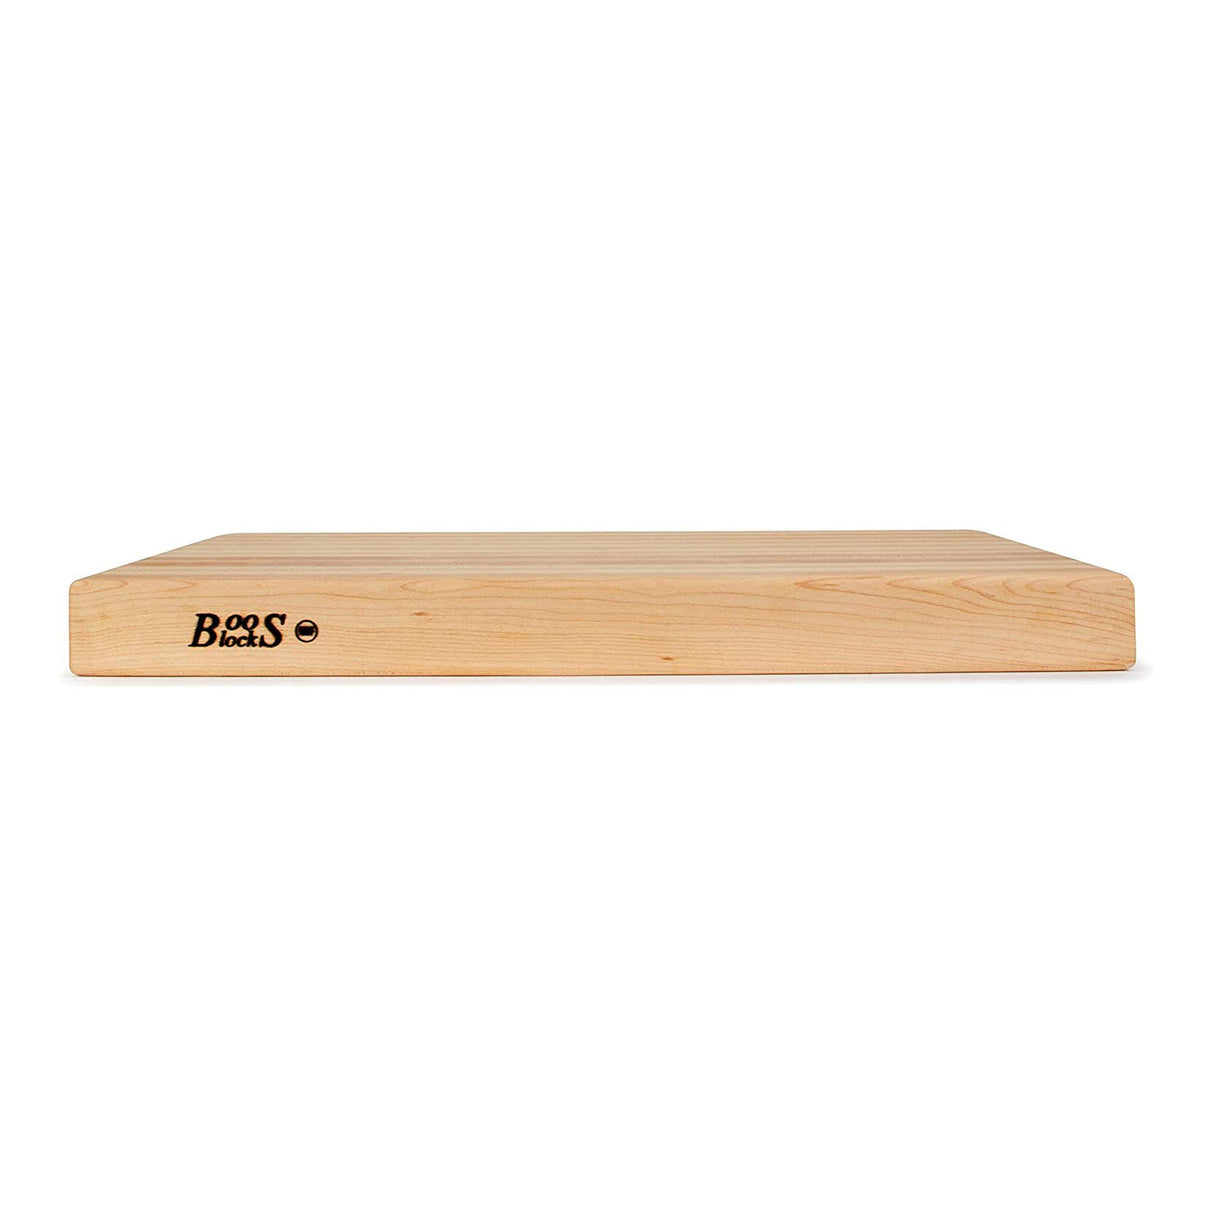 John Boos RA03 Maple Wood Cutting Board for Kitchen Prep 24 Inches x 18 Inches, 2.25 Thick Reversible End Grain Rectangular Charcuterie Block 24X18X2.25 MPL-EDGE GR-REV-GRIPS-